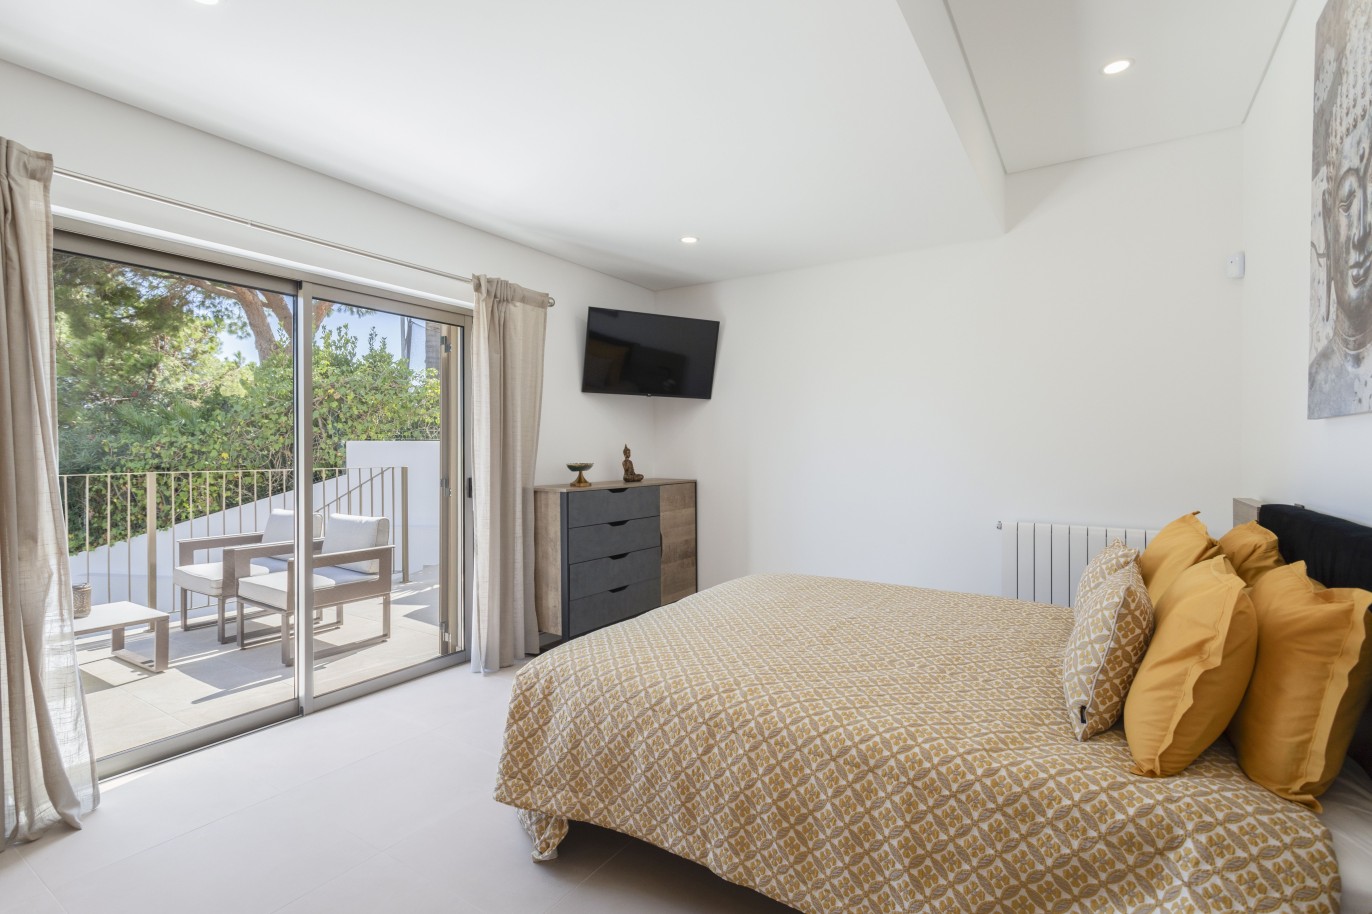 5 bedroom villa with pool, new build, for sale in Albufeira, Algarve_238340